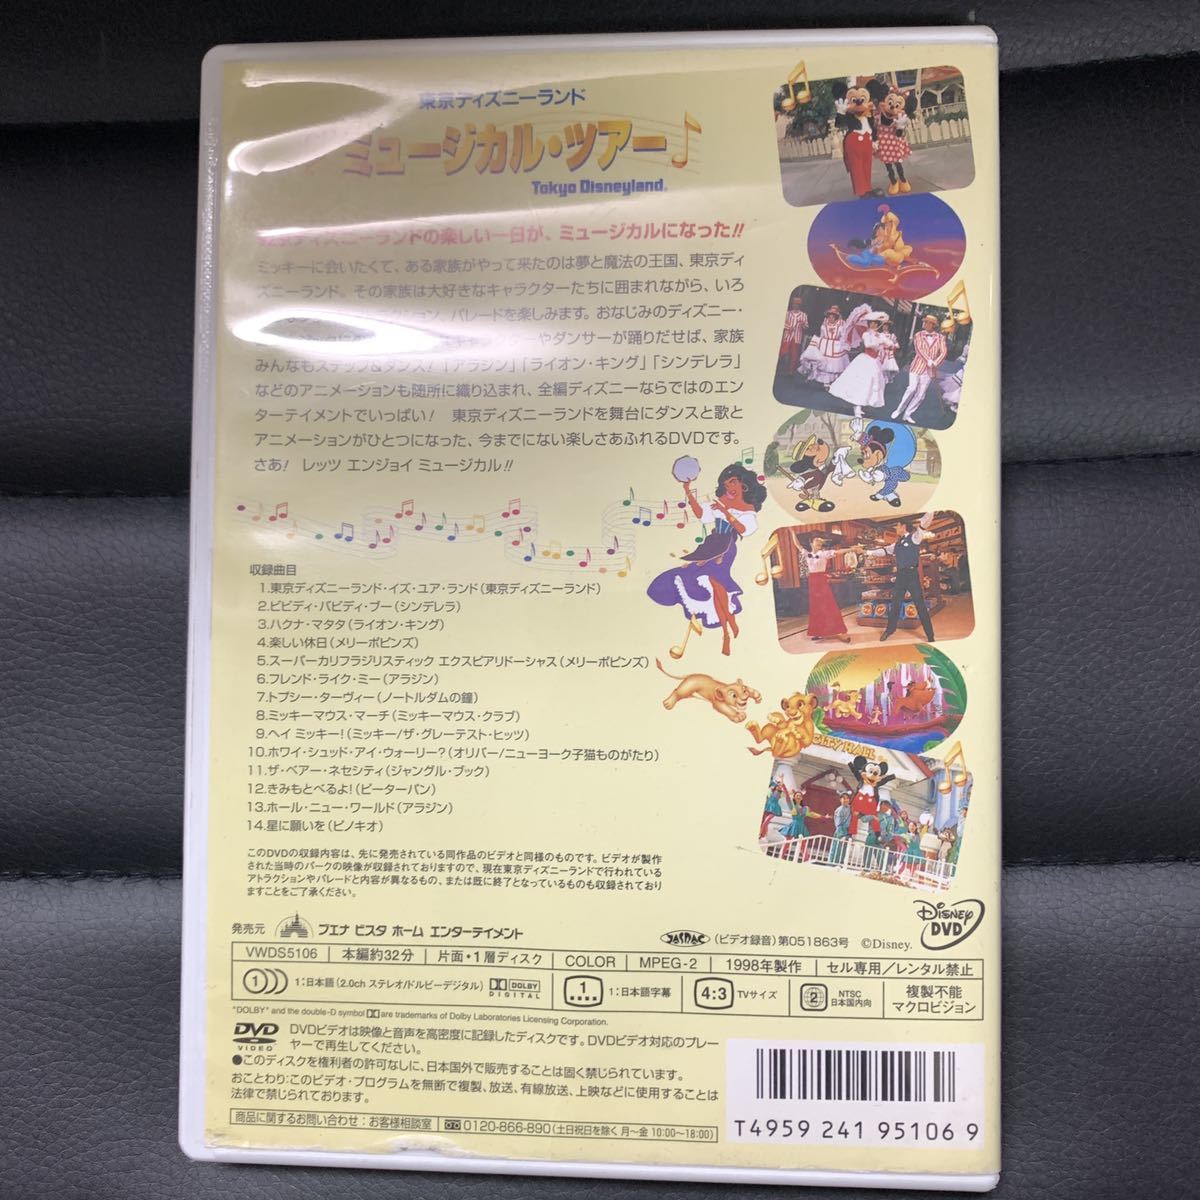  Tokyo Disney Land мюзикл * Tour DVD